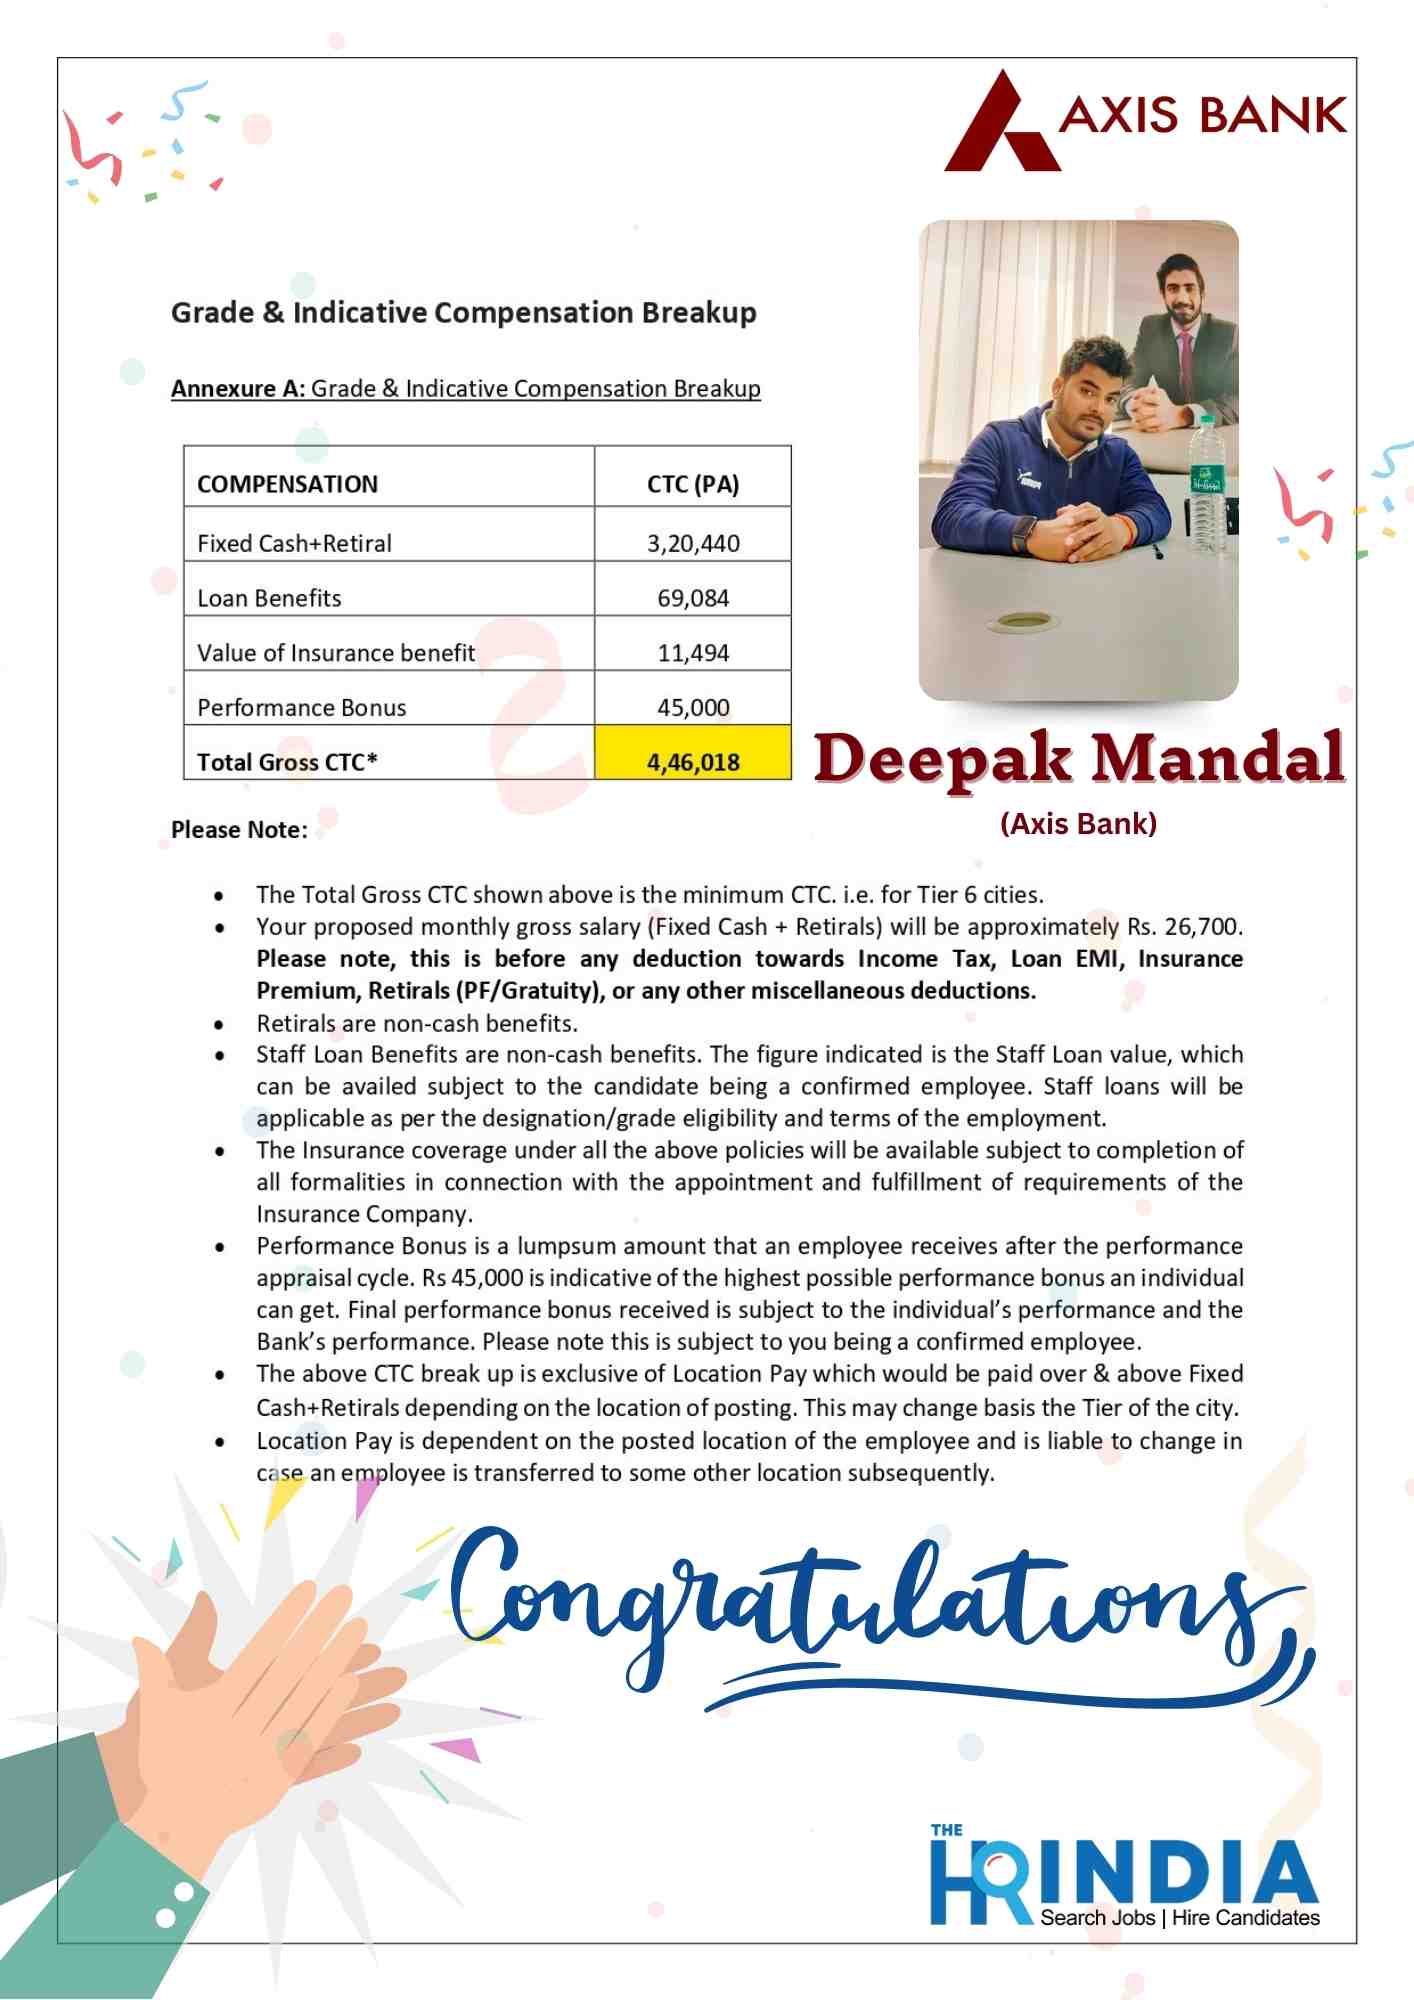 Deepak Mandal  | The HR India